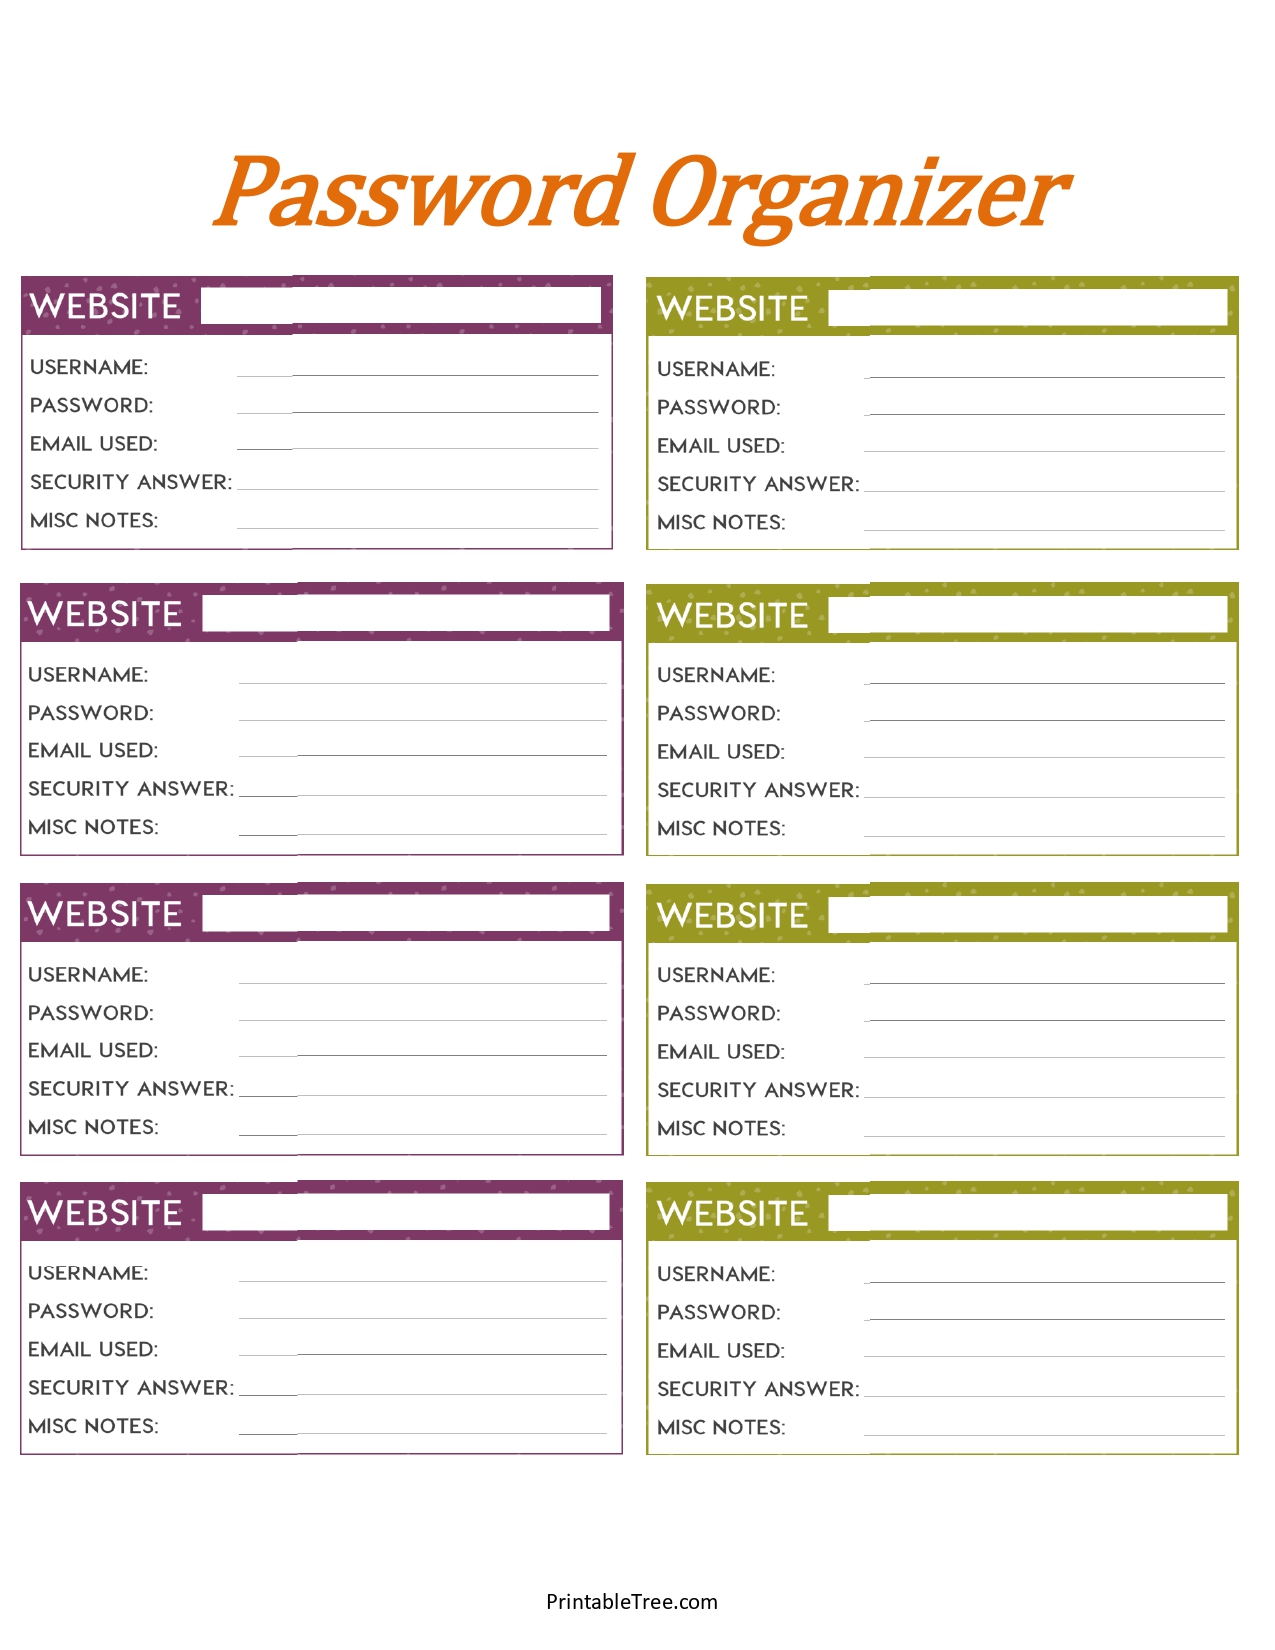 design-templates-paper-party-supplies-password-keeper-a4-password